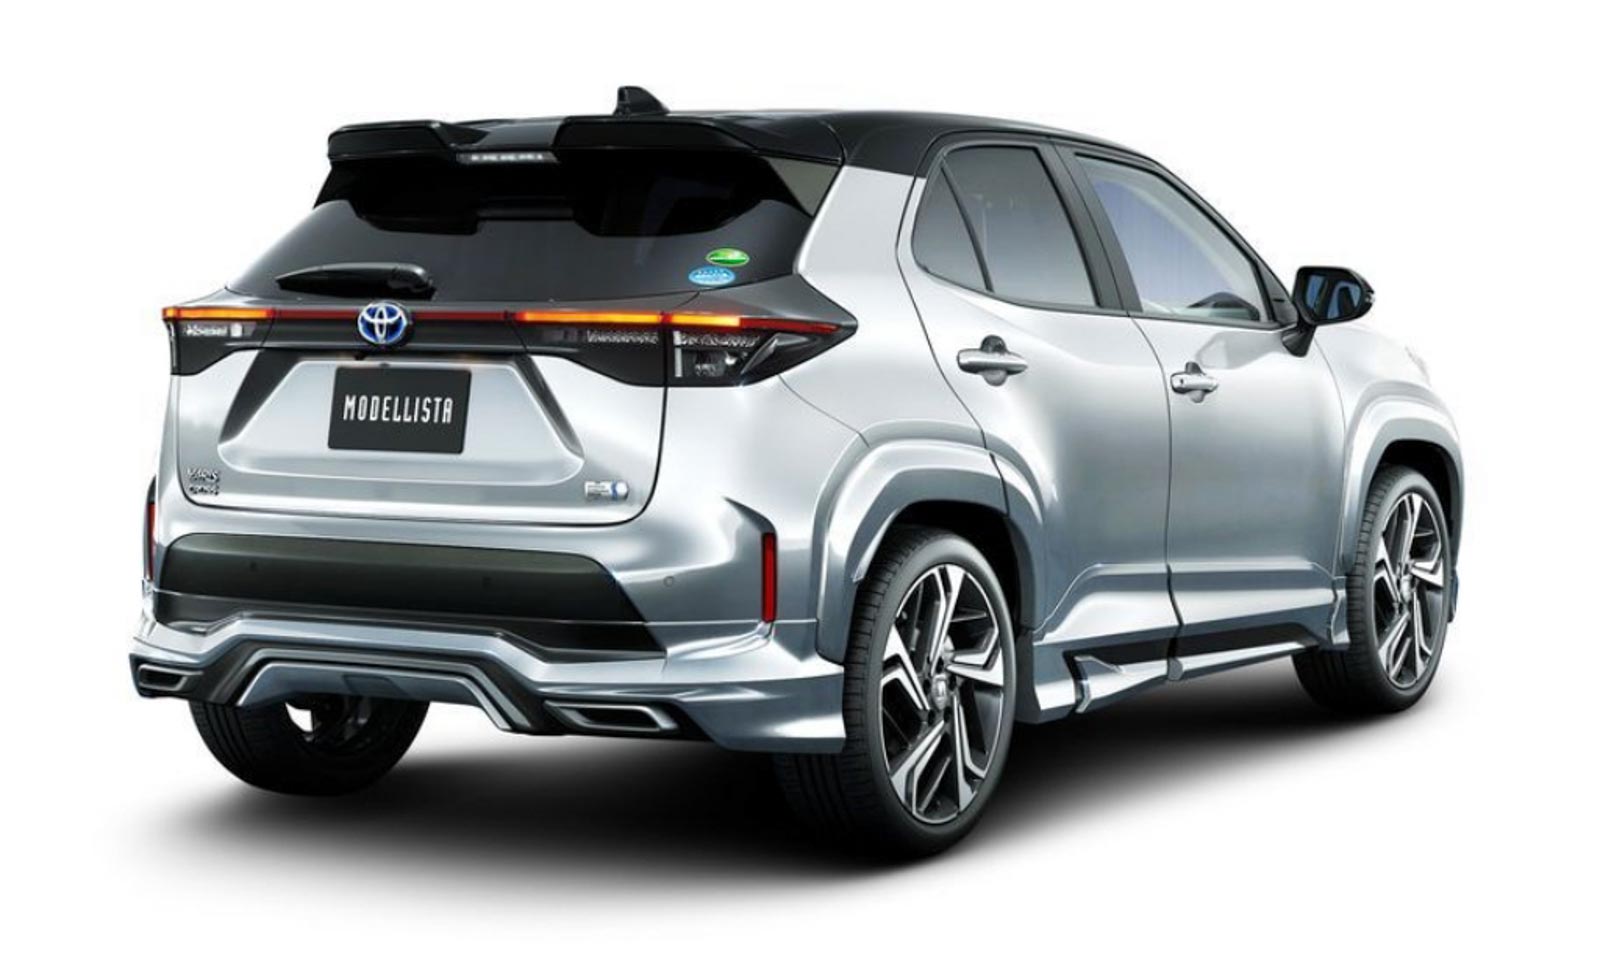 Toyota Yaris Cross TRD & Modellista Kits Unveiled; Enhance Off